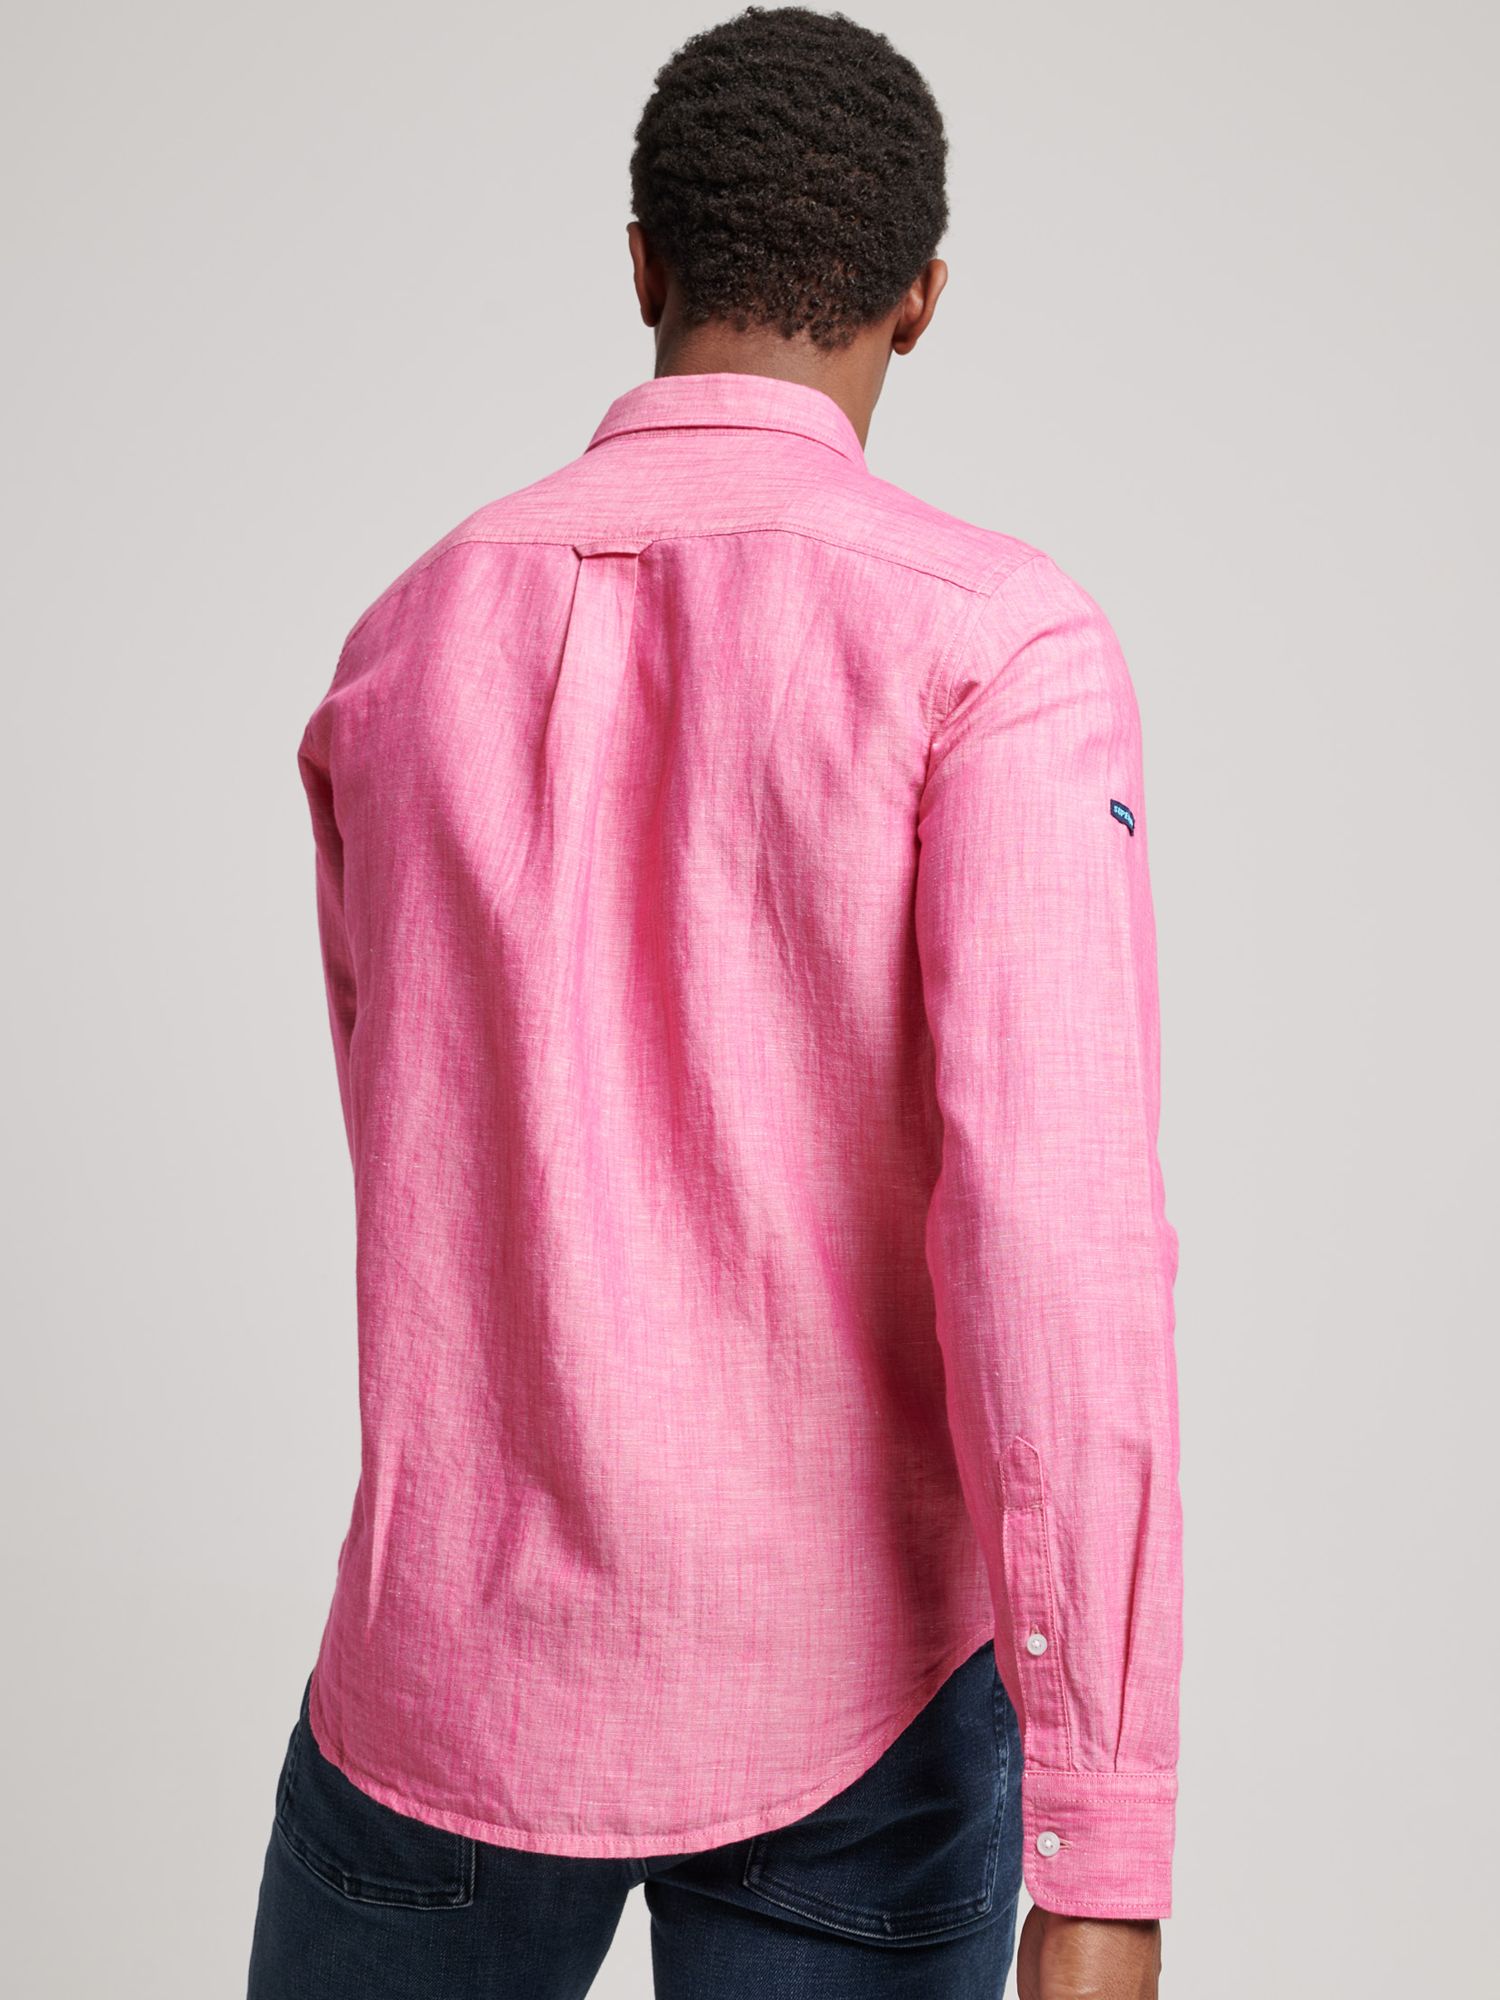 Superdry Organic Cotton Studios Linen Button Down Shirt, Vibe Pink, S